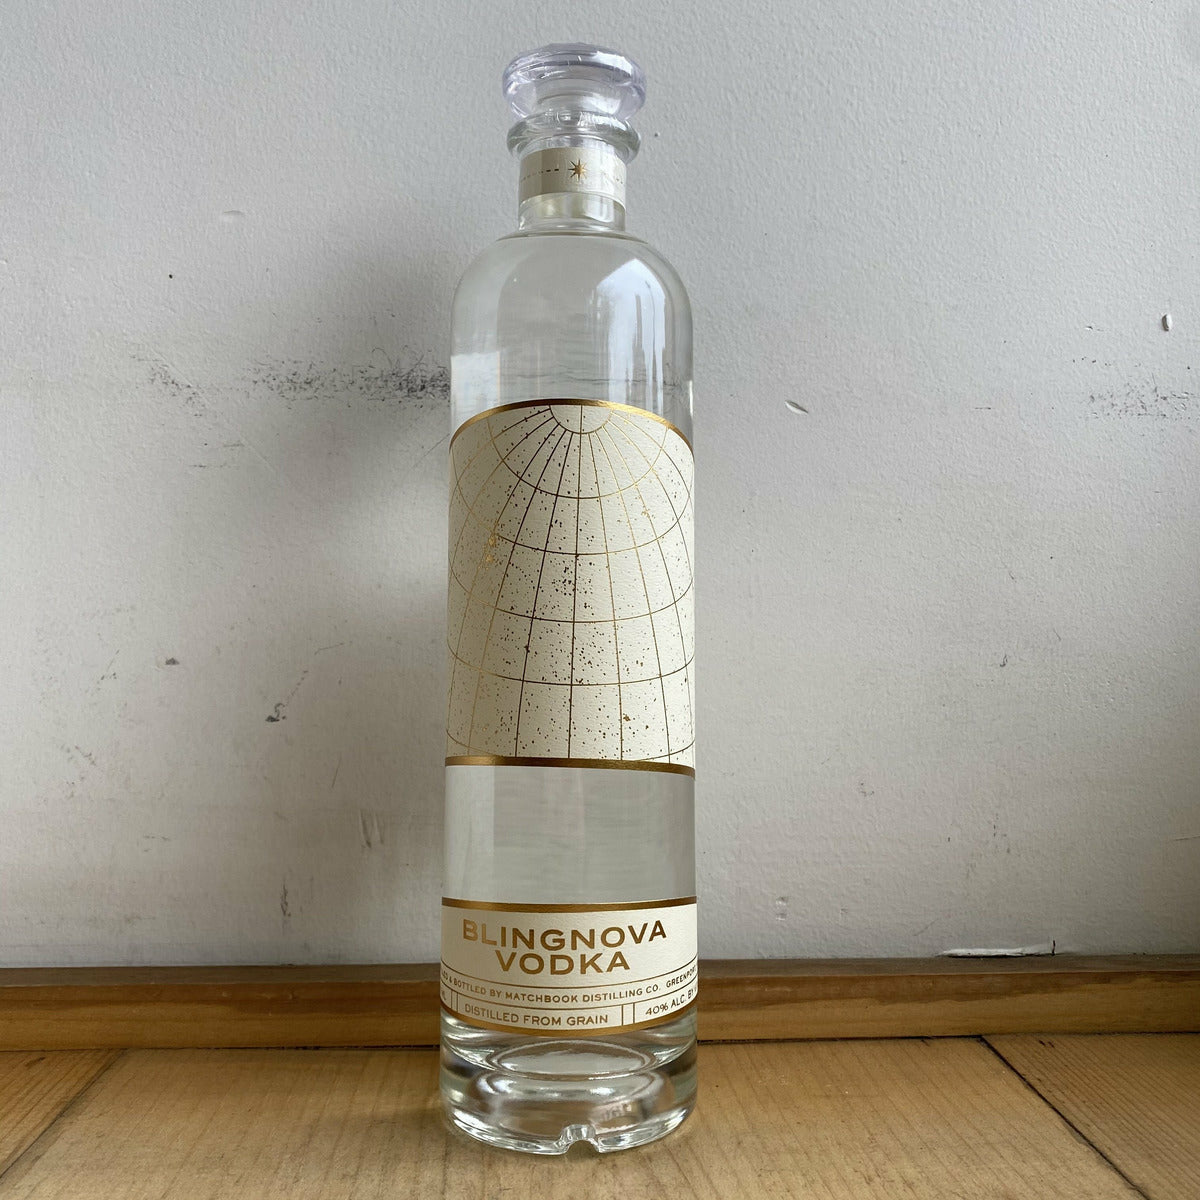 Matchbook Distilling Co., "Blingnova" Organic Vodka